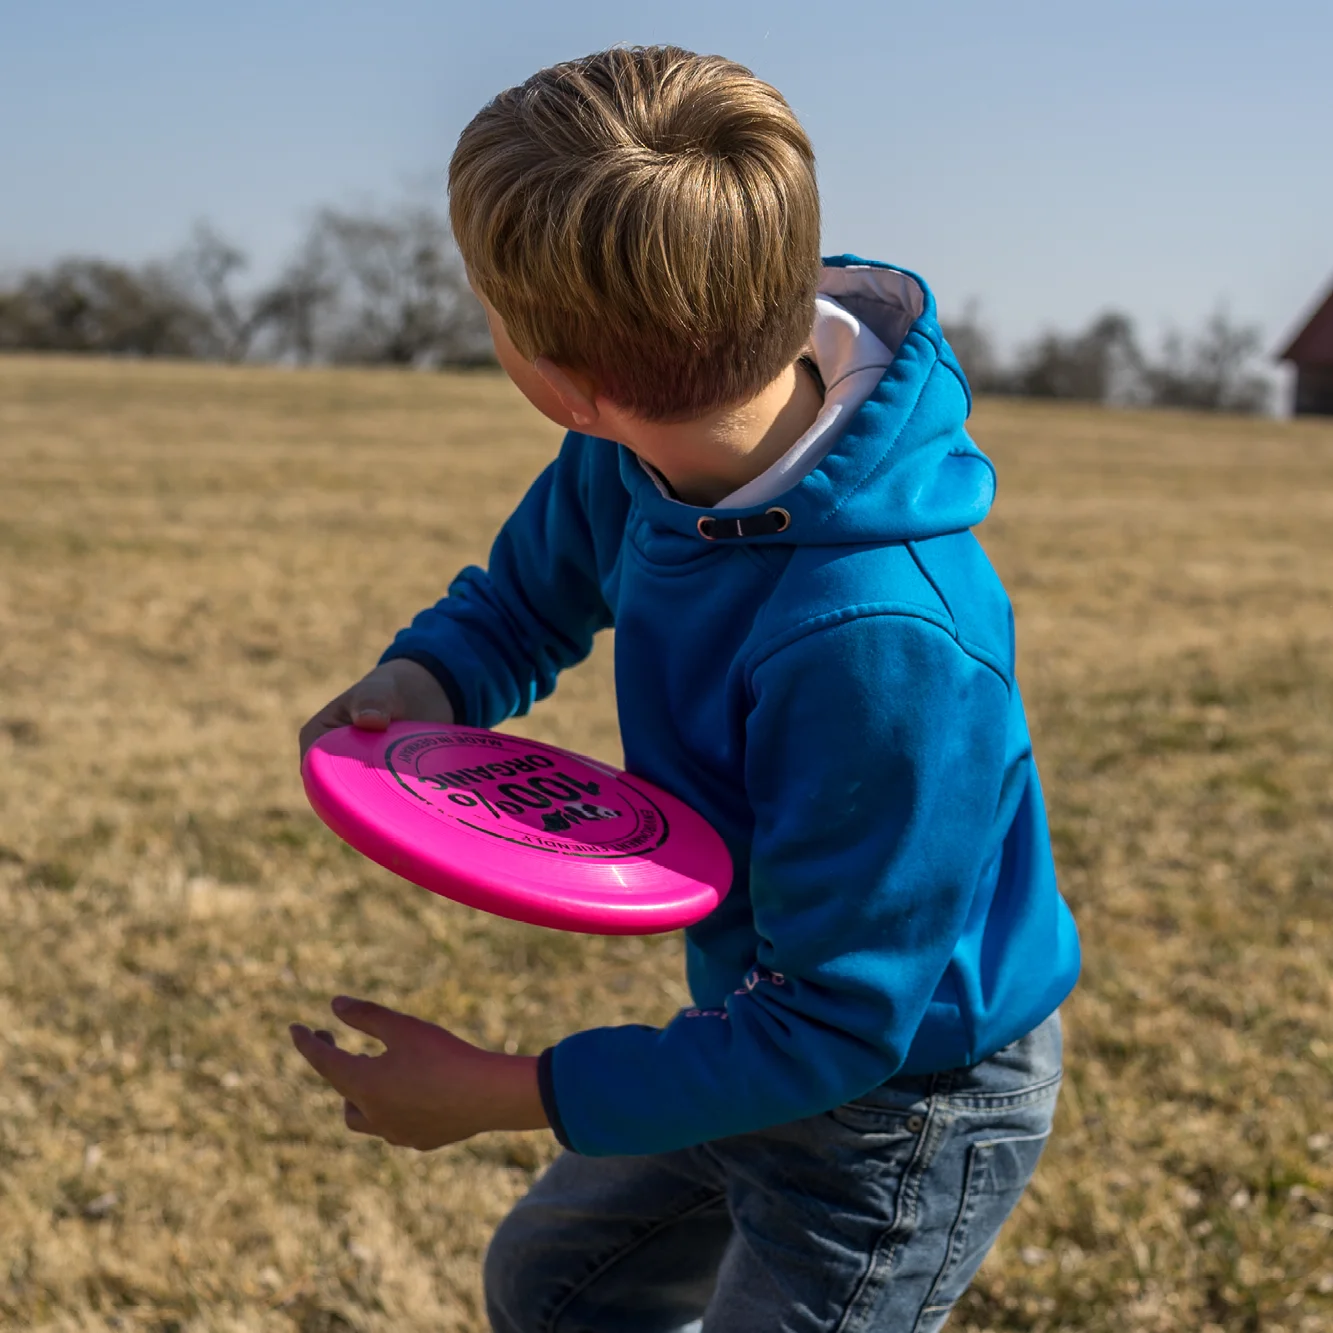  Frisbees for Kids: Best Soft Frisbee Kids Boomerang - Easter  Basket Stuffer For Boys & Girls - Outdoor Flying Disc Beach Frisbee for  Kids Age 6 & up - Fun Boys